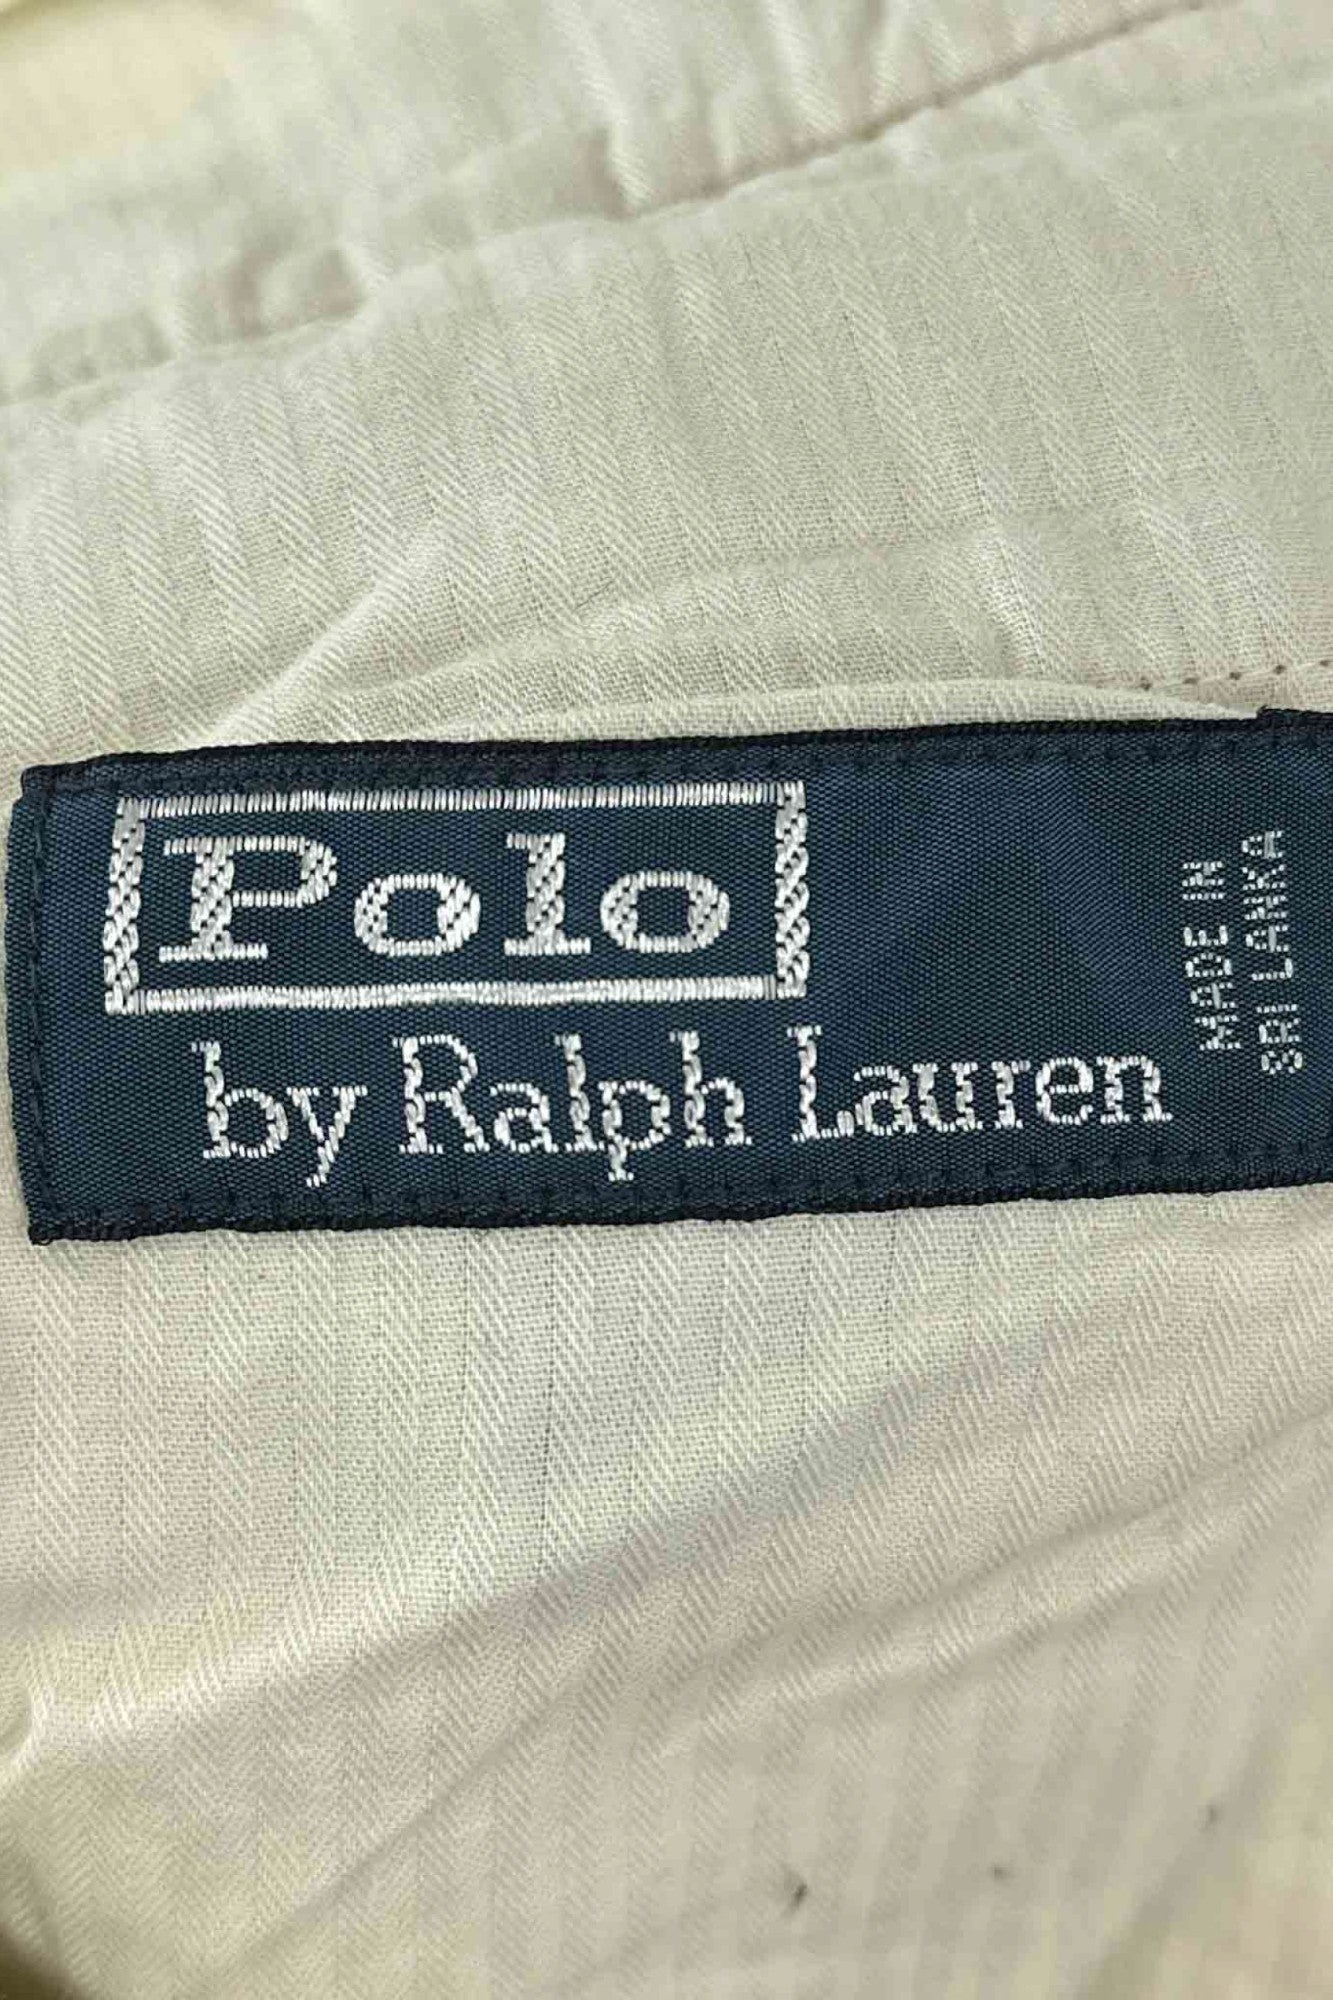 90's Polo by Ralph Lauren brown corduroy pants